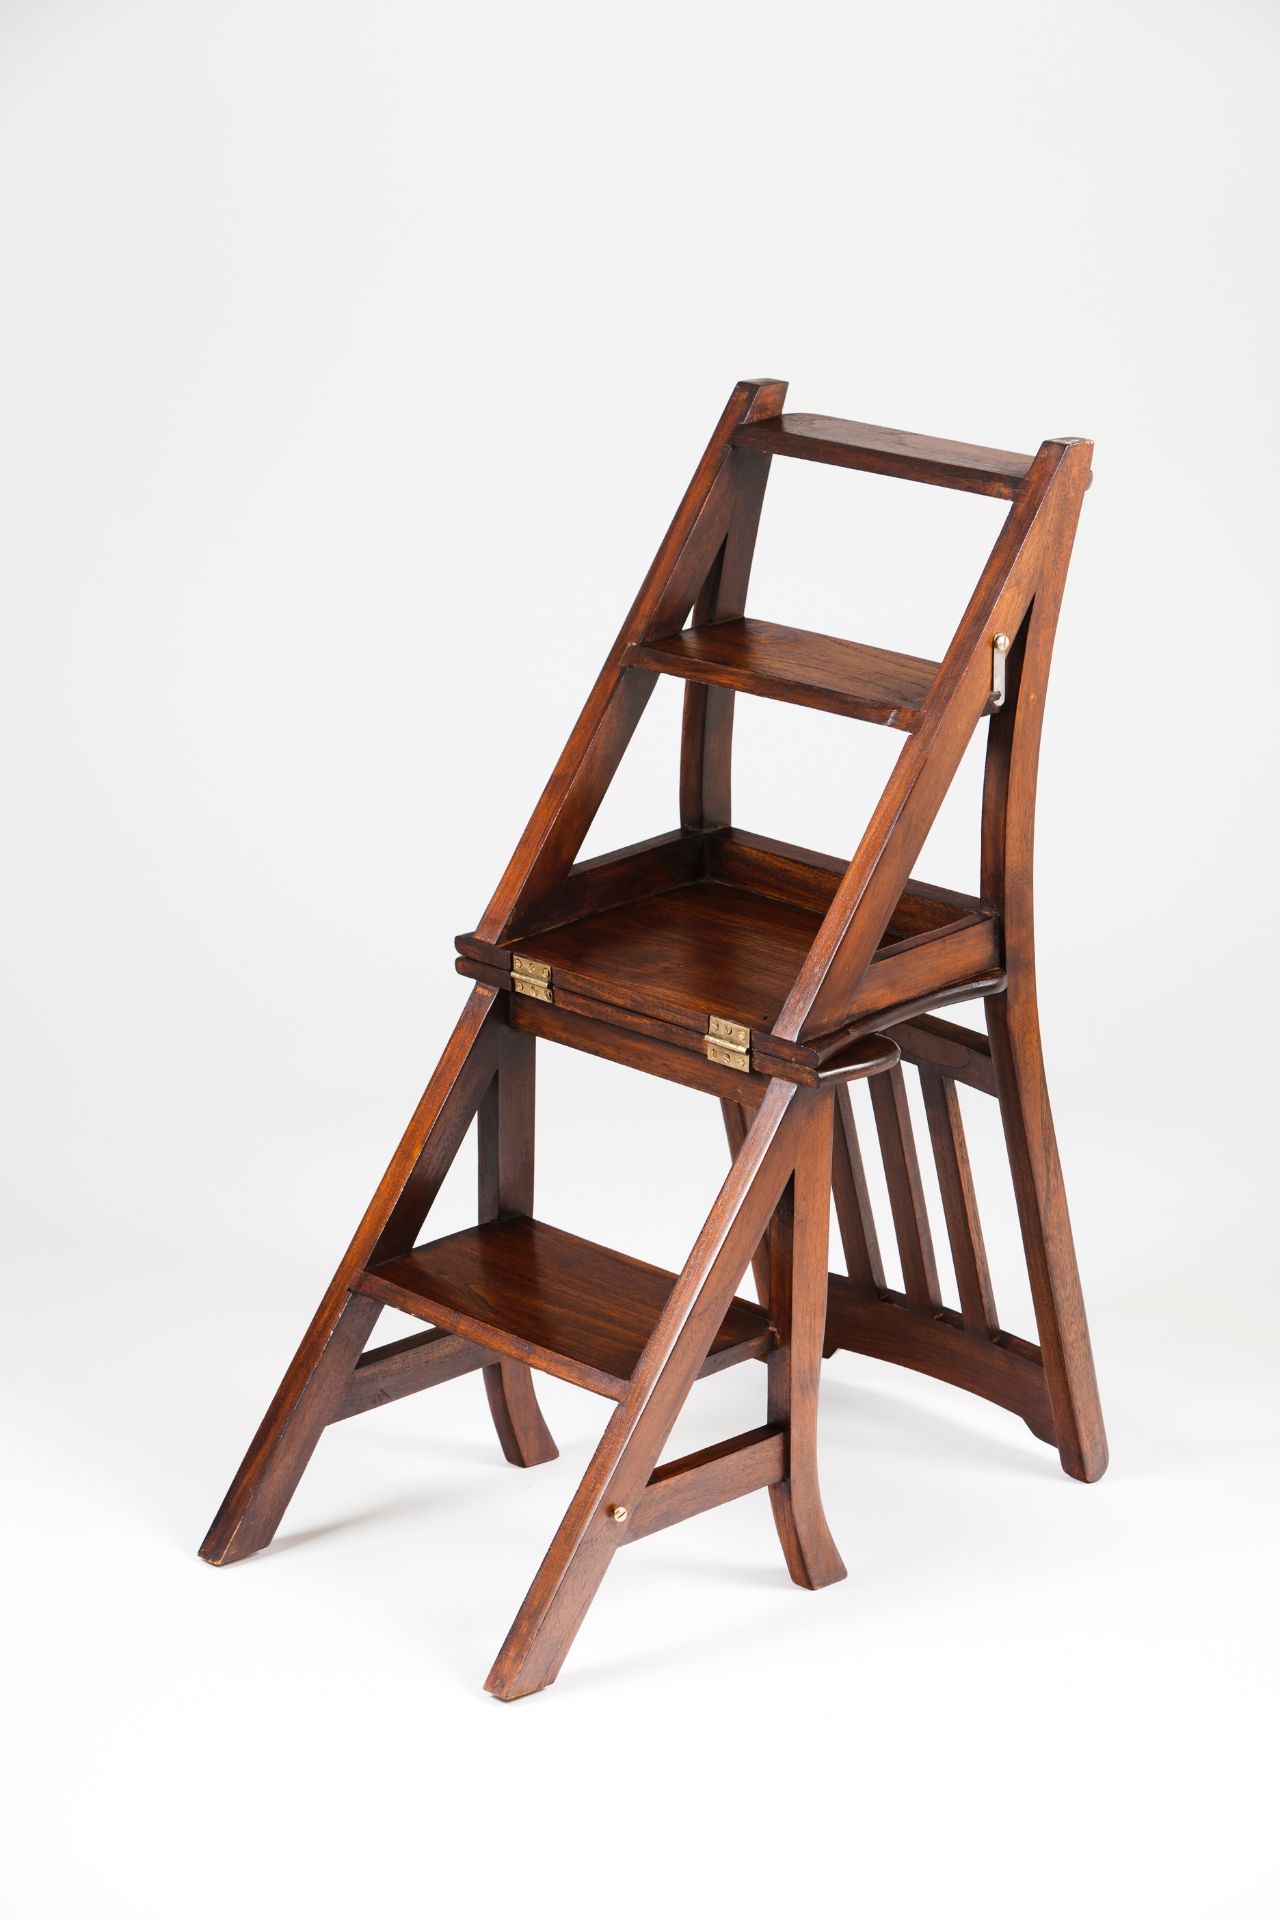 A metamorphic library chair / step ladder